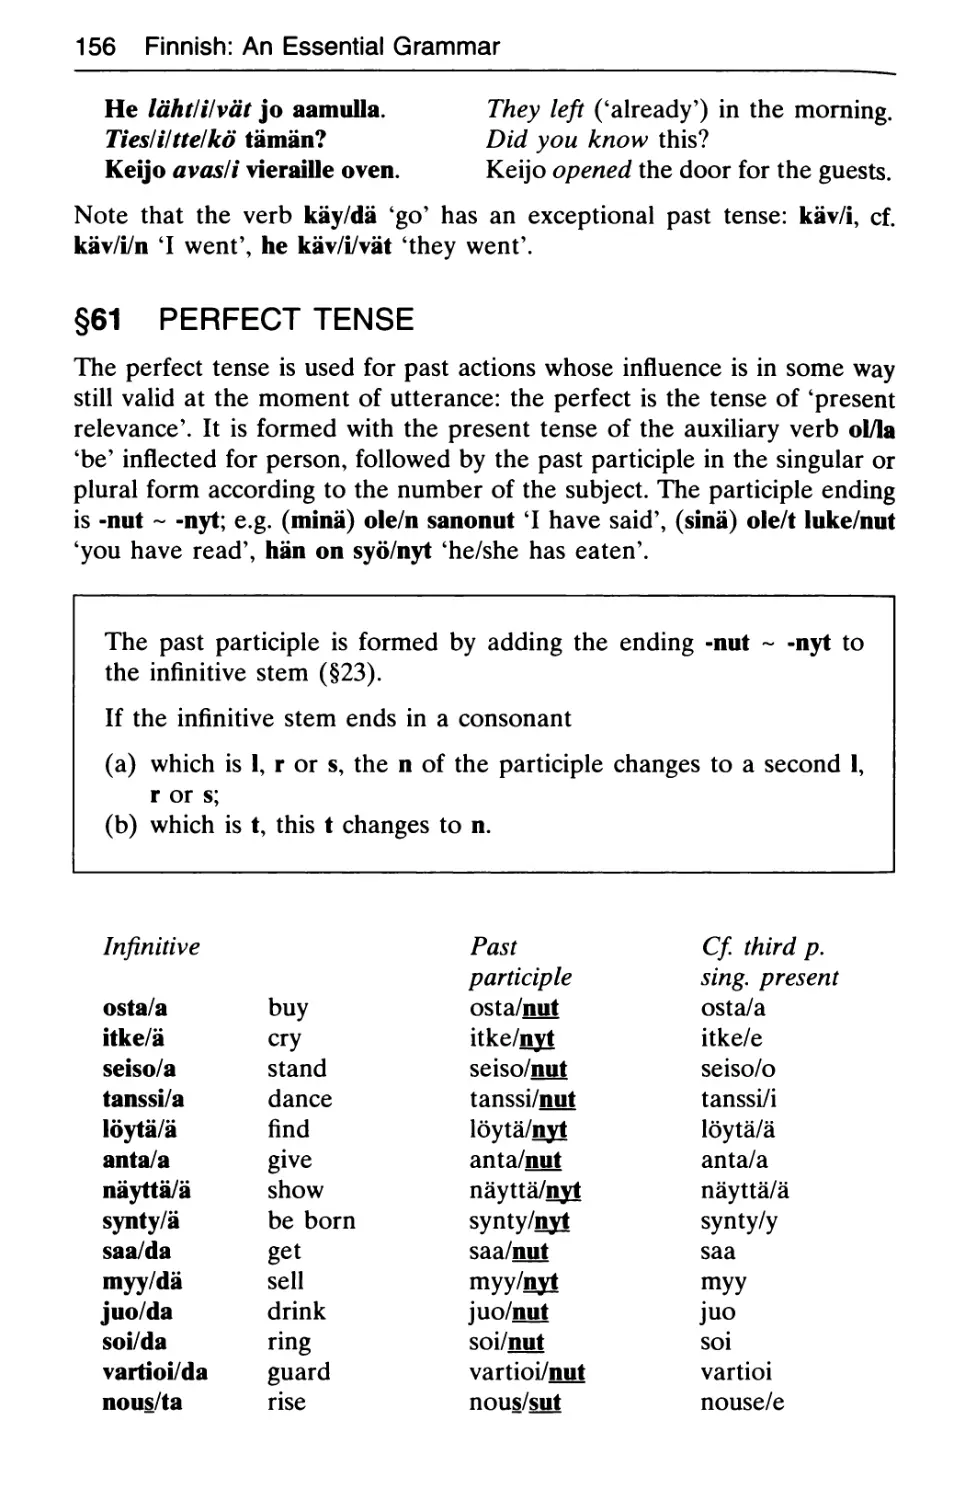 §61 Perfect tense